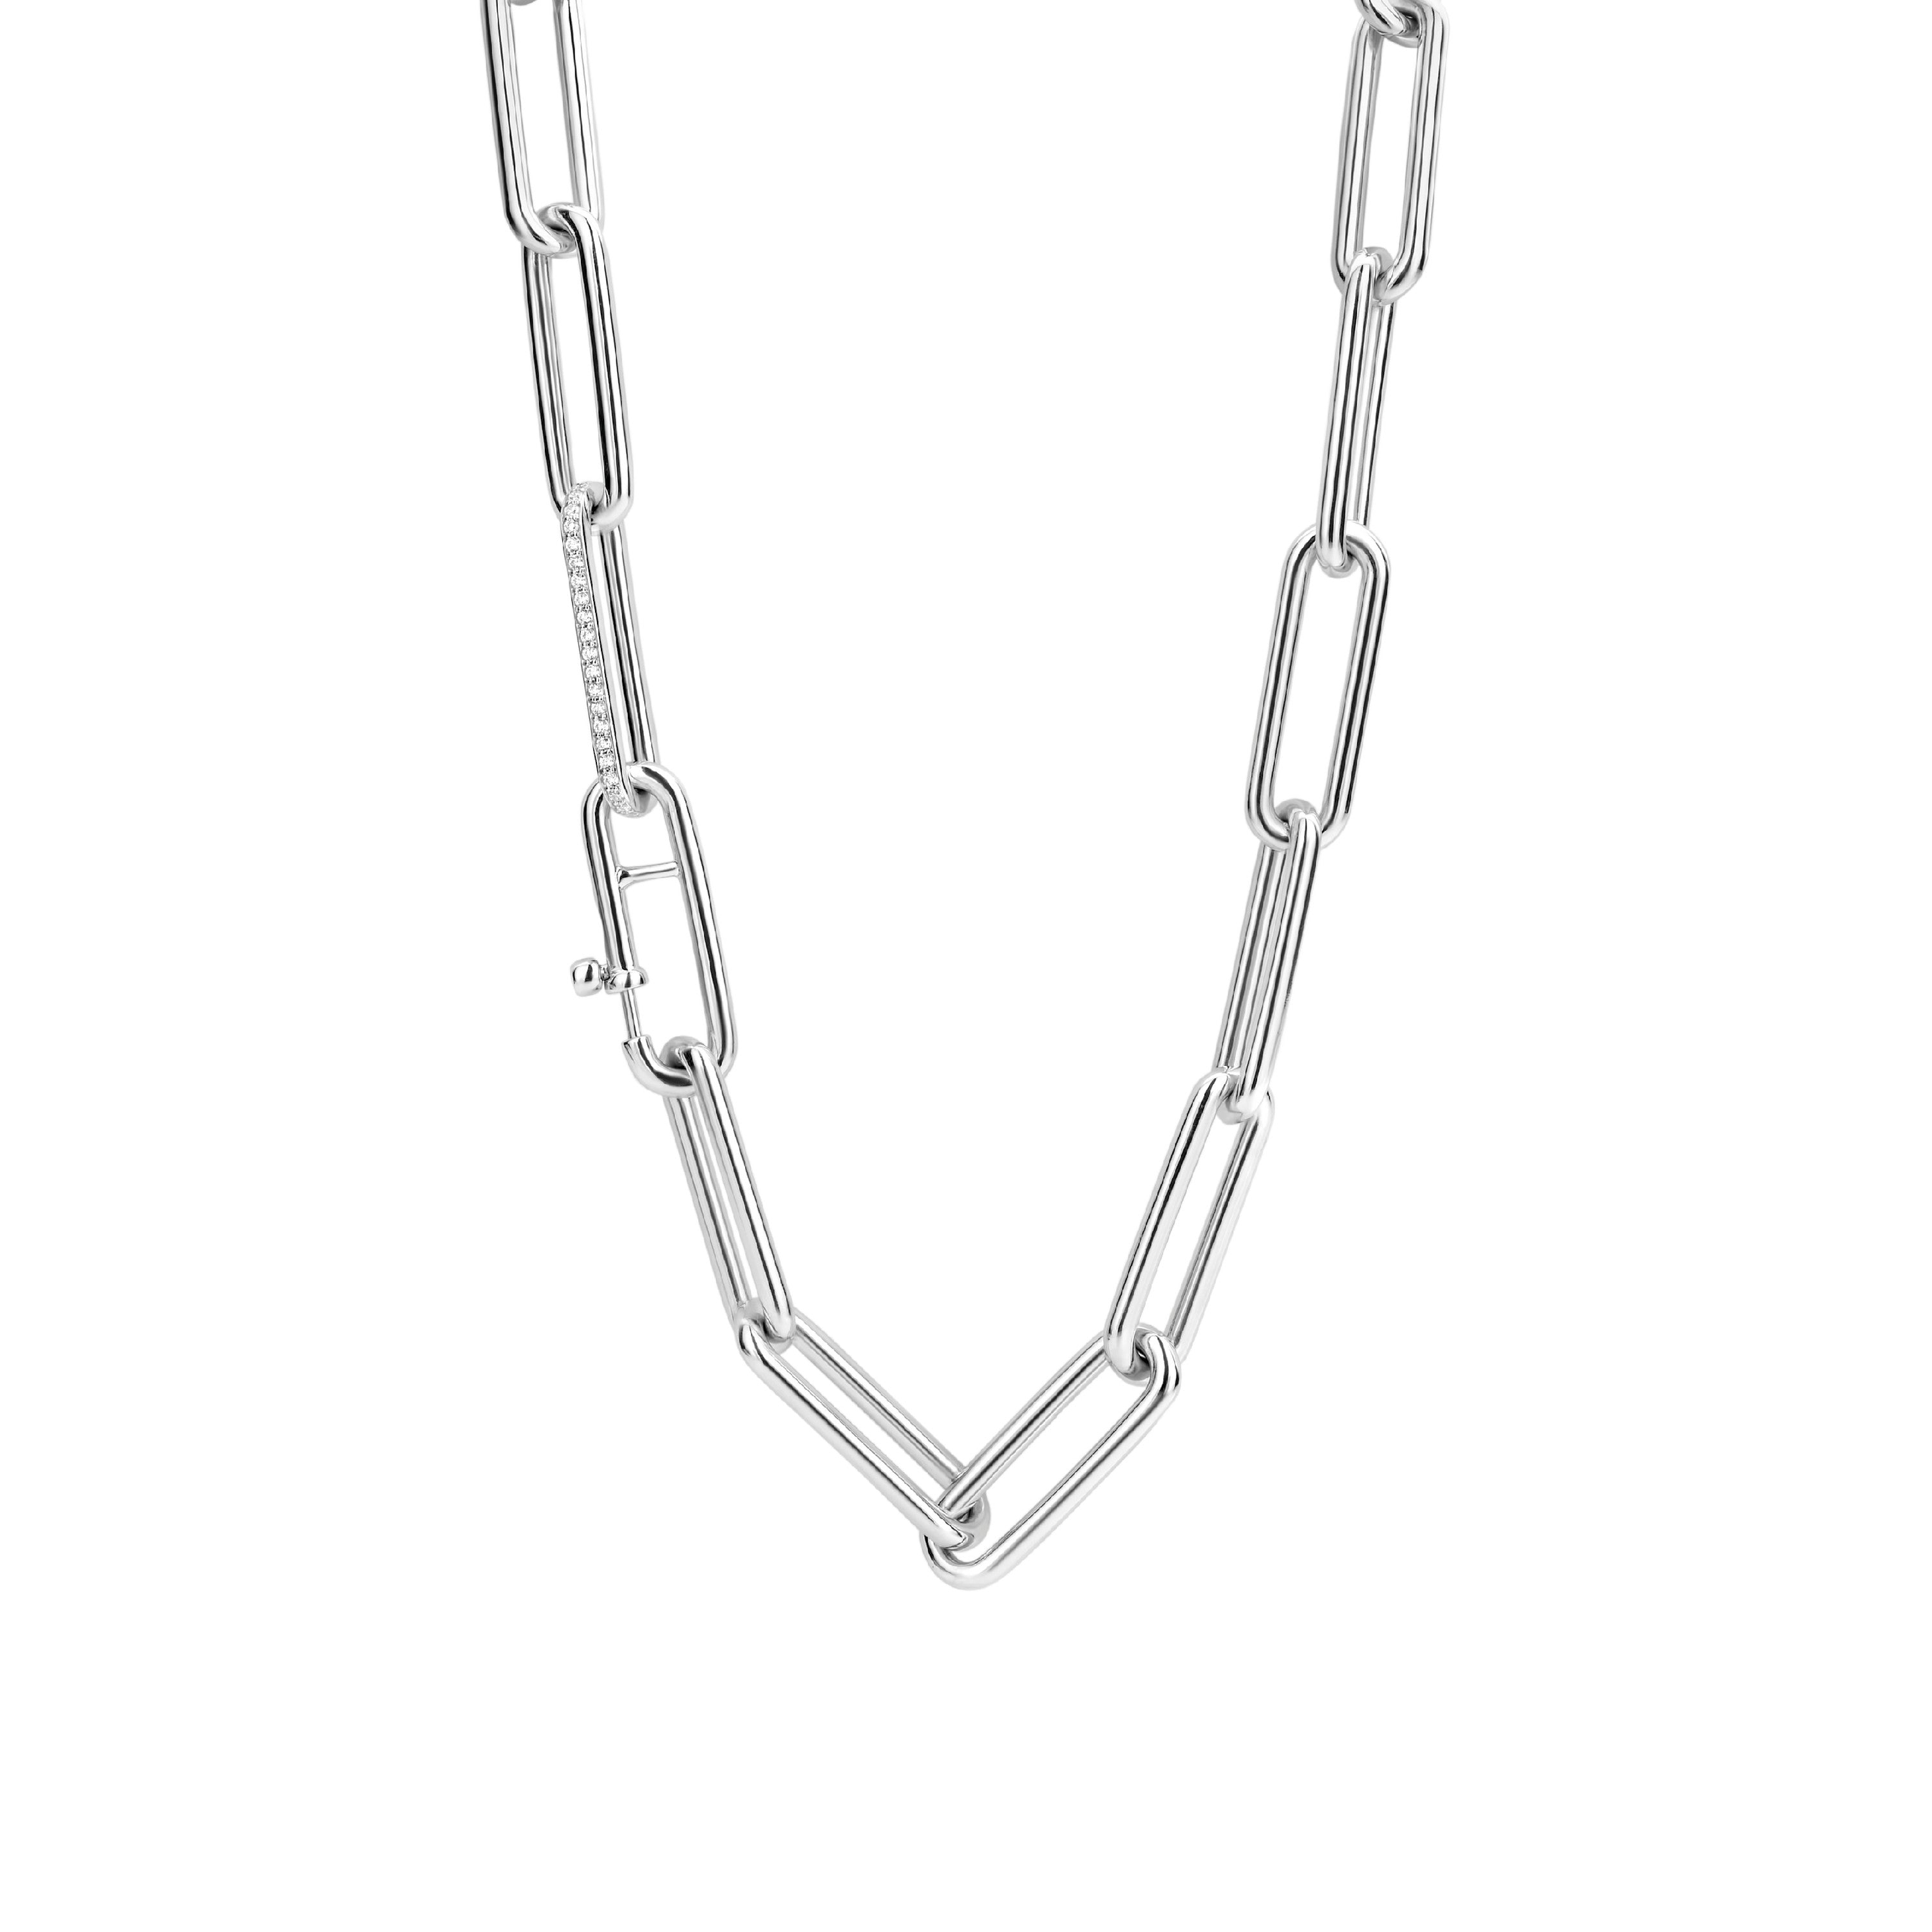 XL Papecllip Silver Necklace